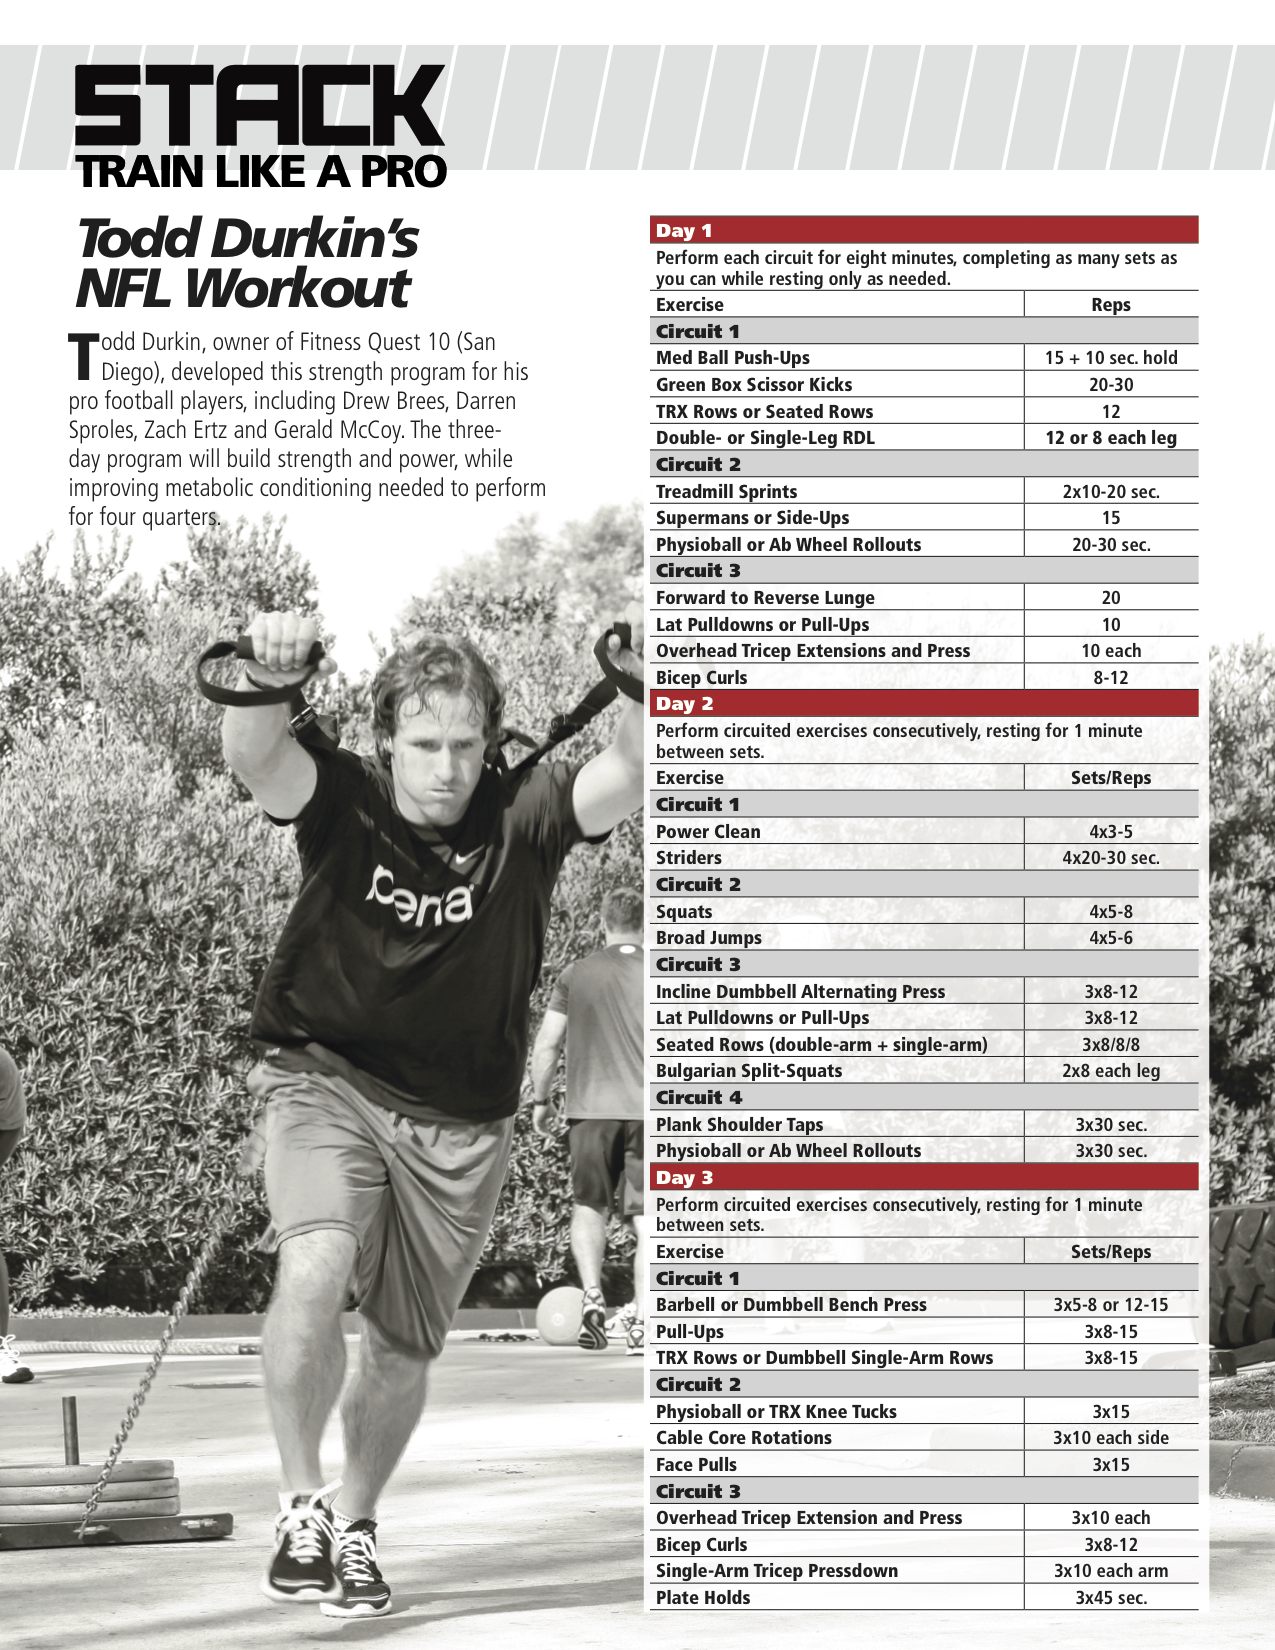 Todd Durkin's NFL Workout